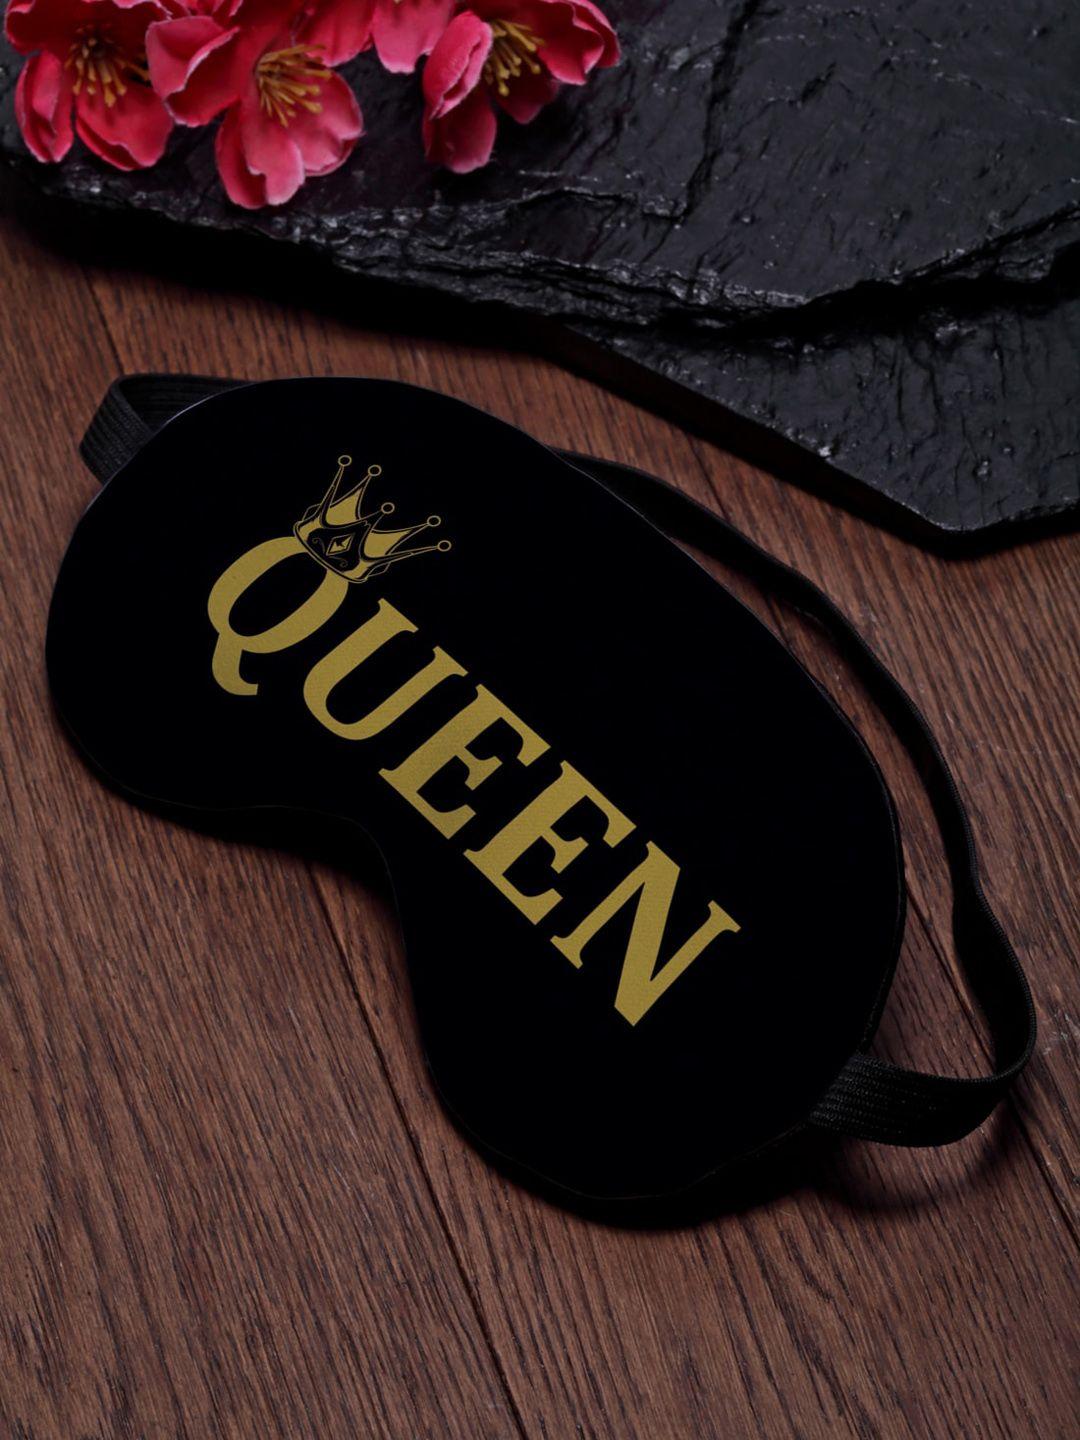 ferosh black & gold-toned queen crown printed eye mask